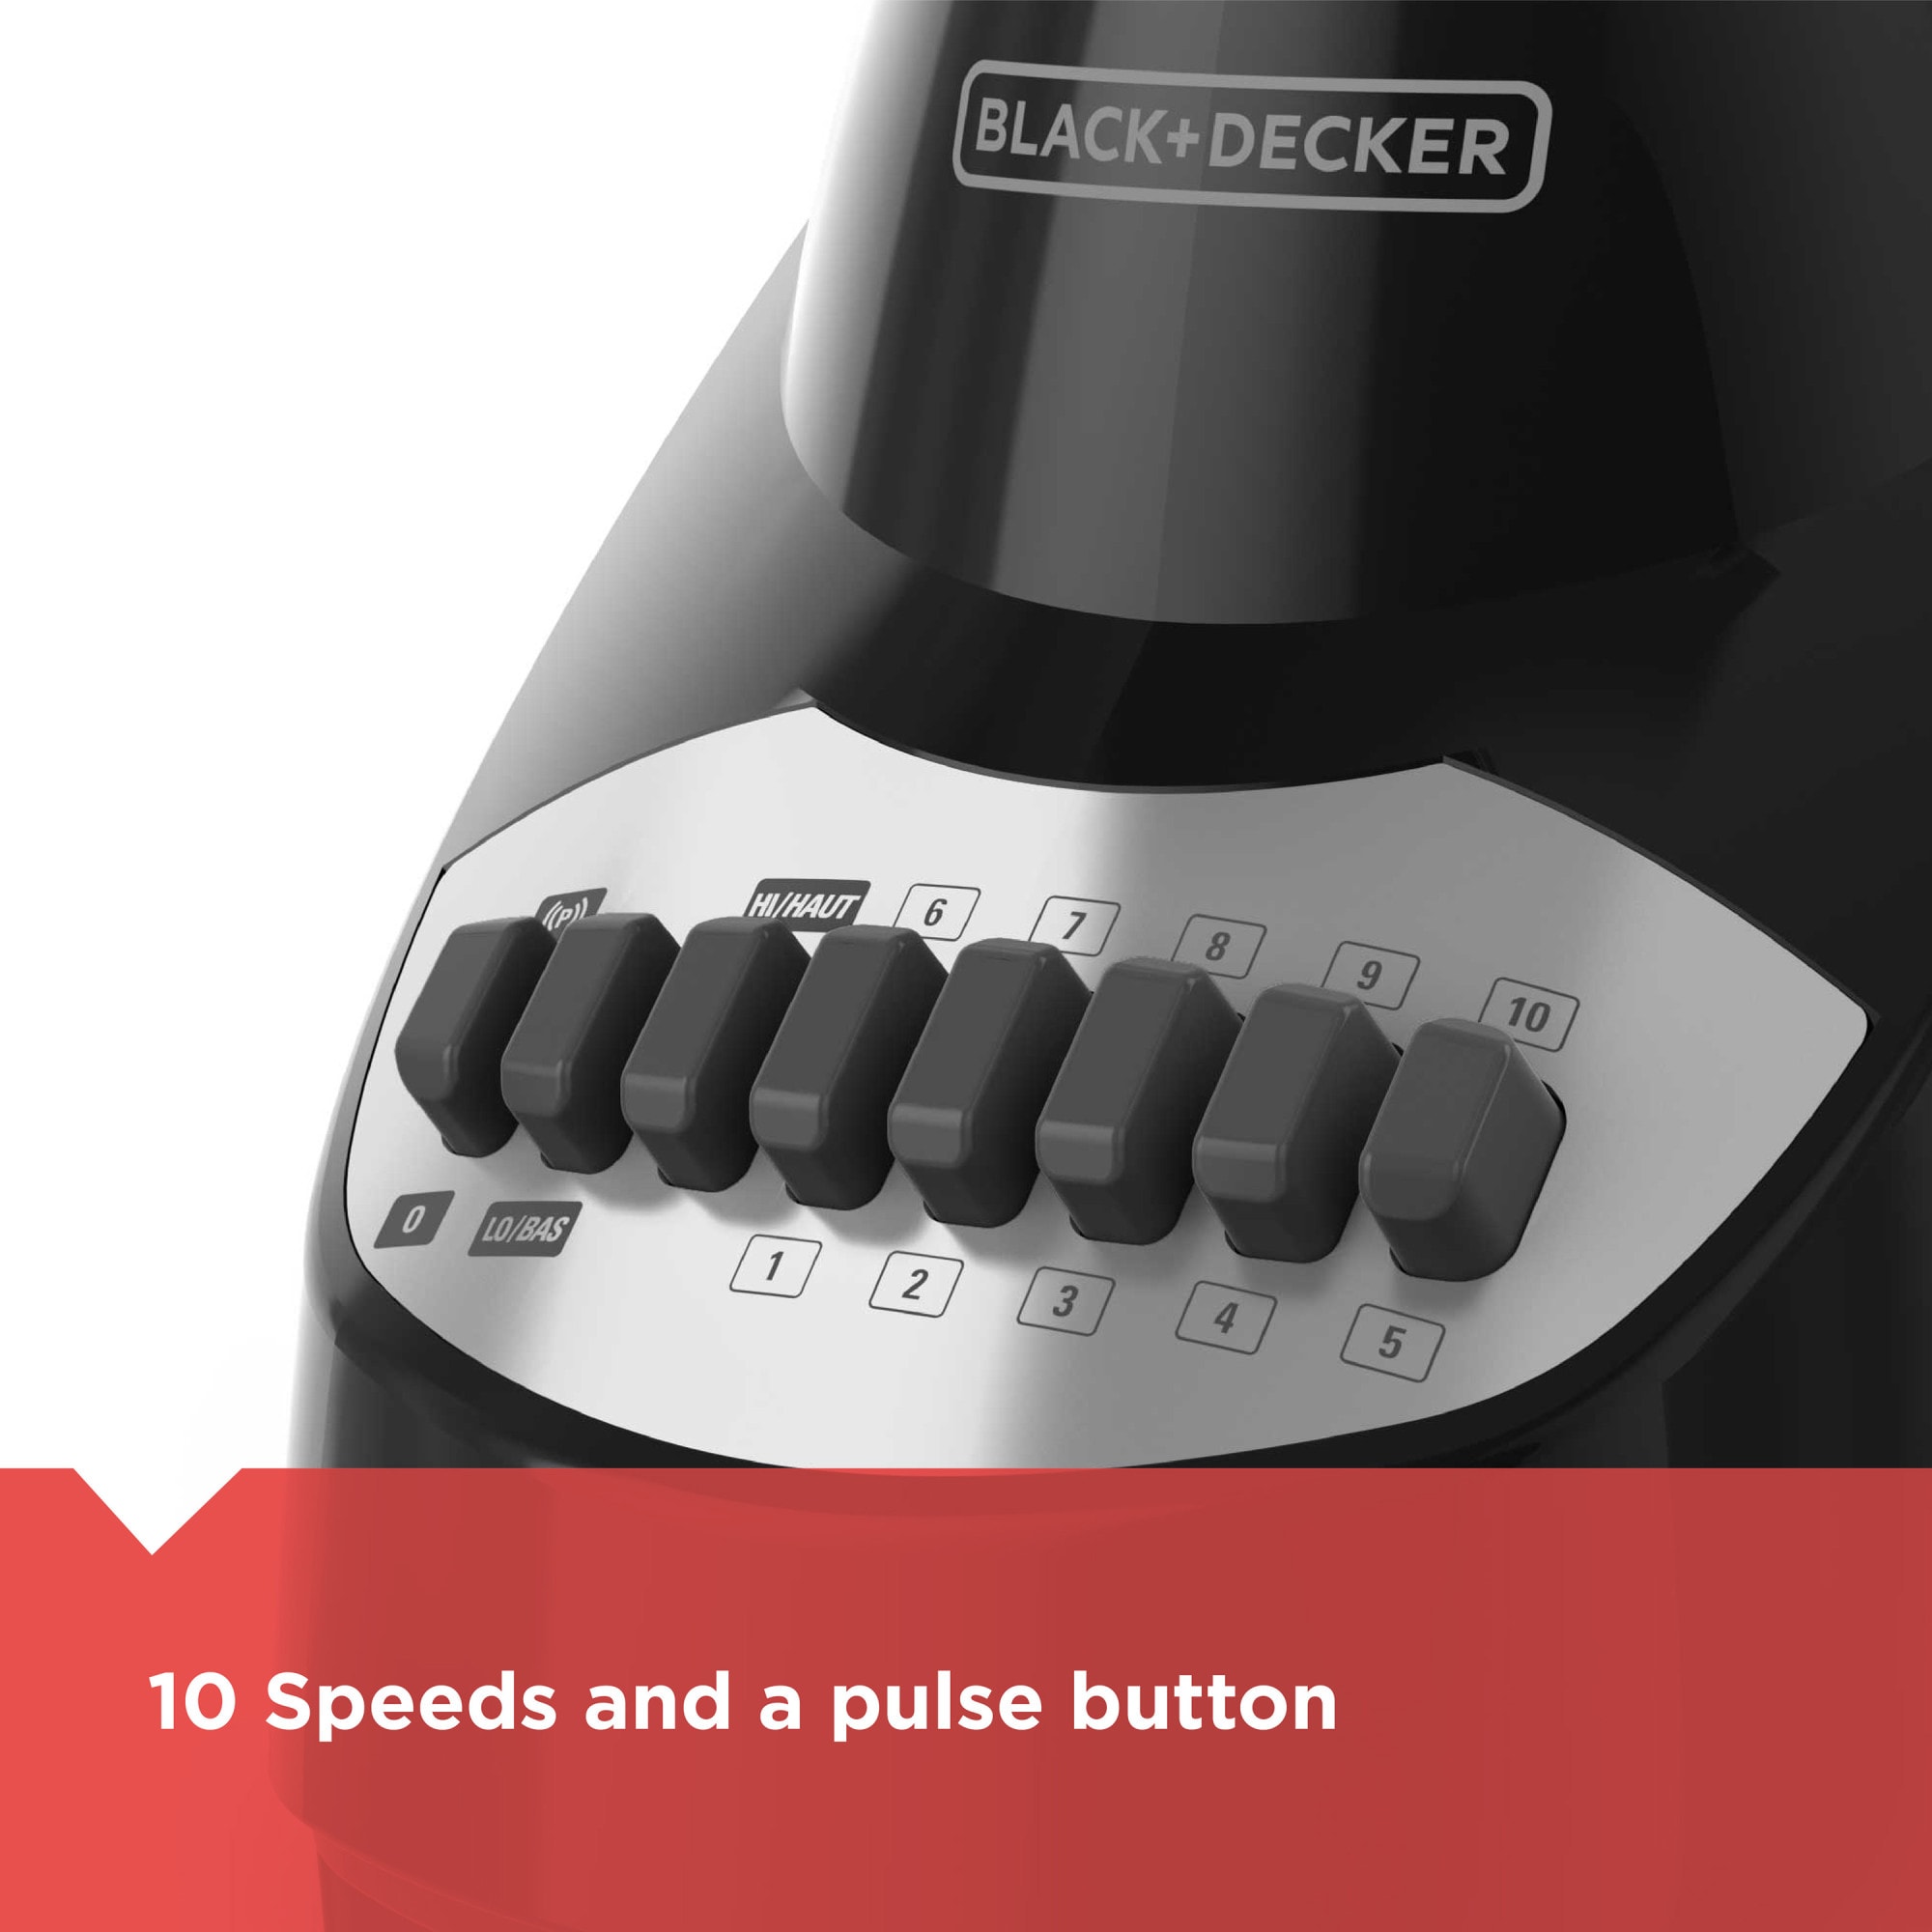 Black & Decker Fusion Blade 12 Speed Pulse Electric Blender 550 watt 6 Cup/48oz